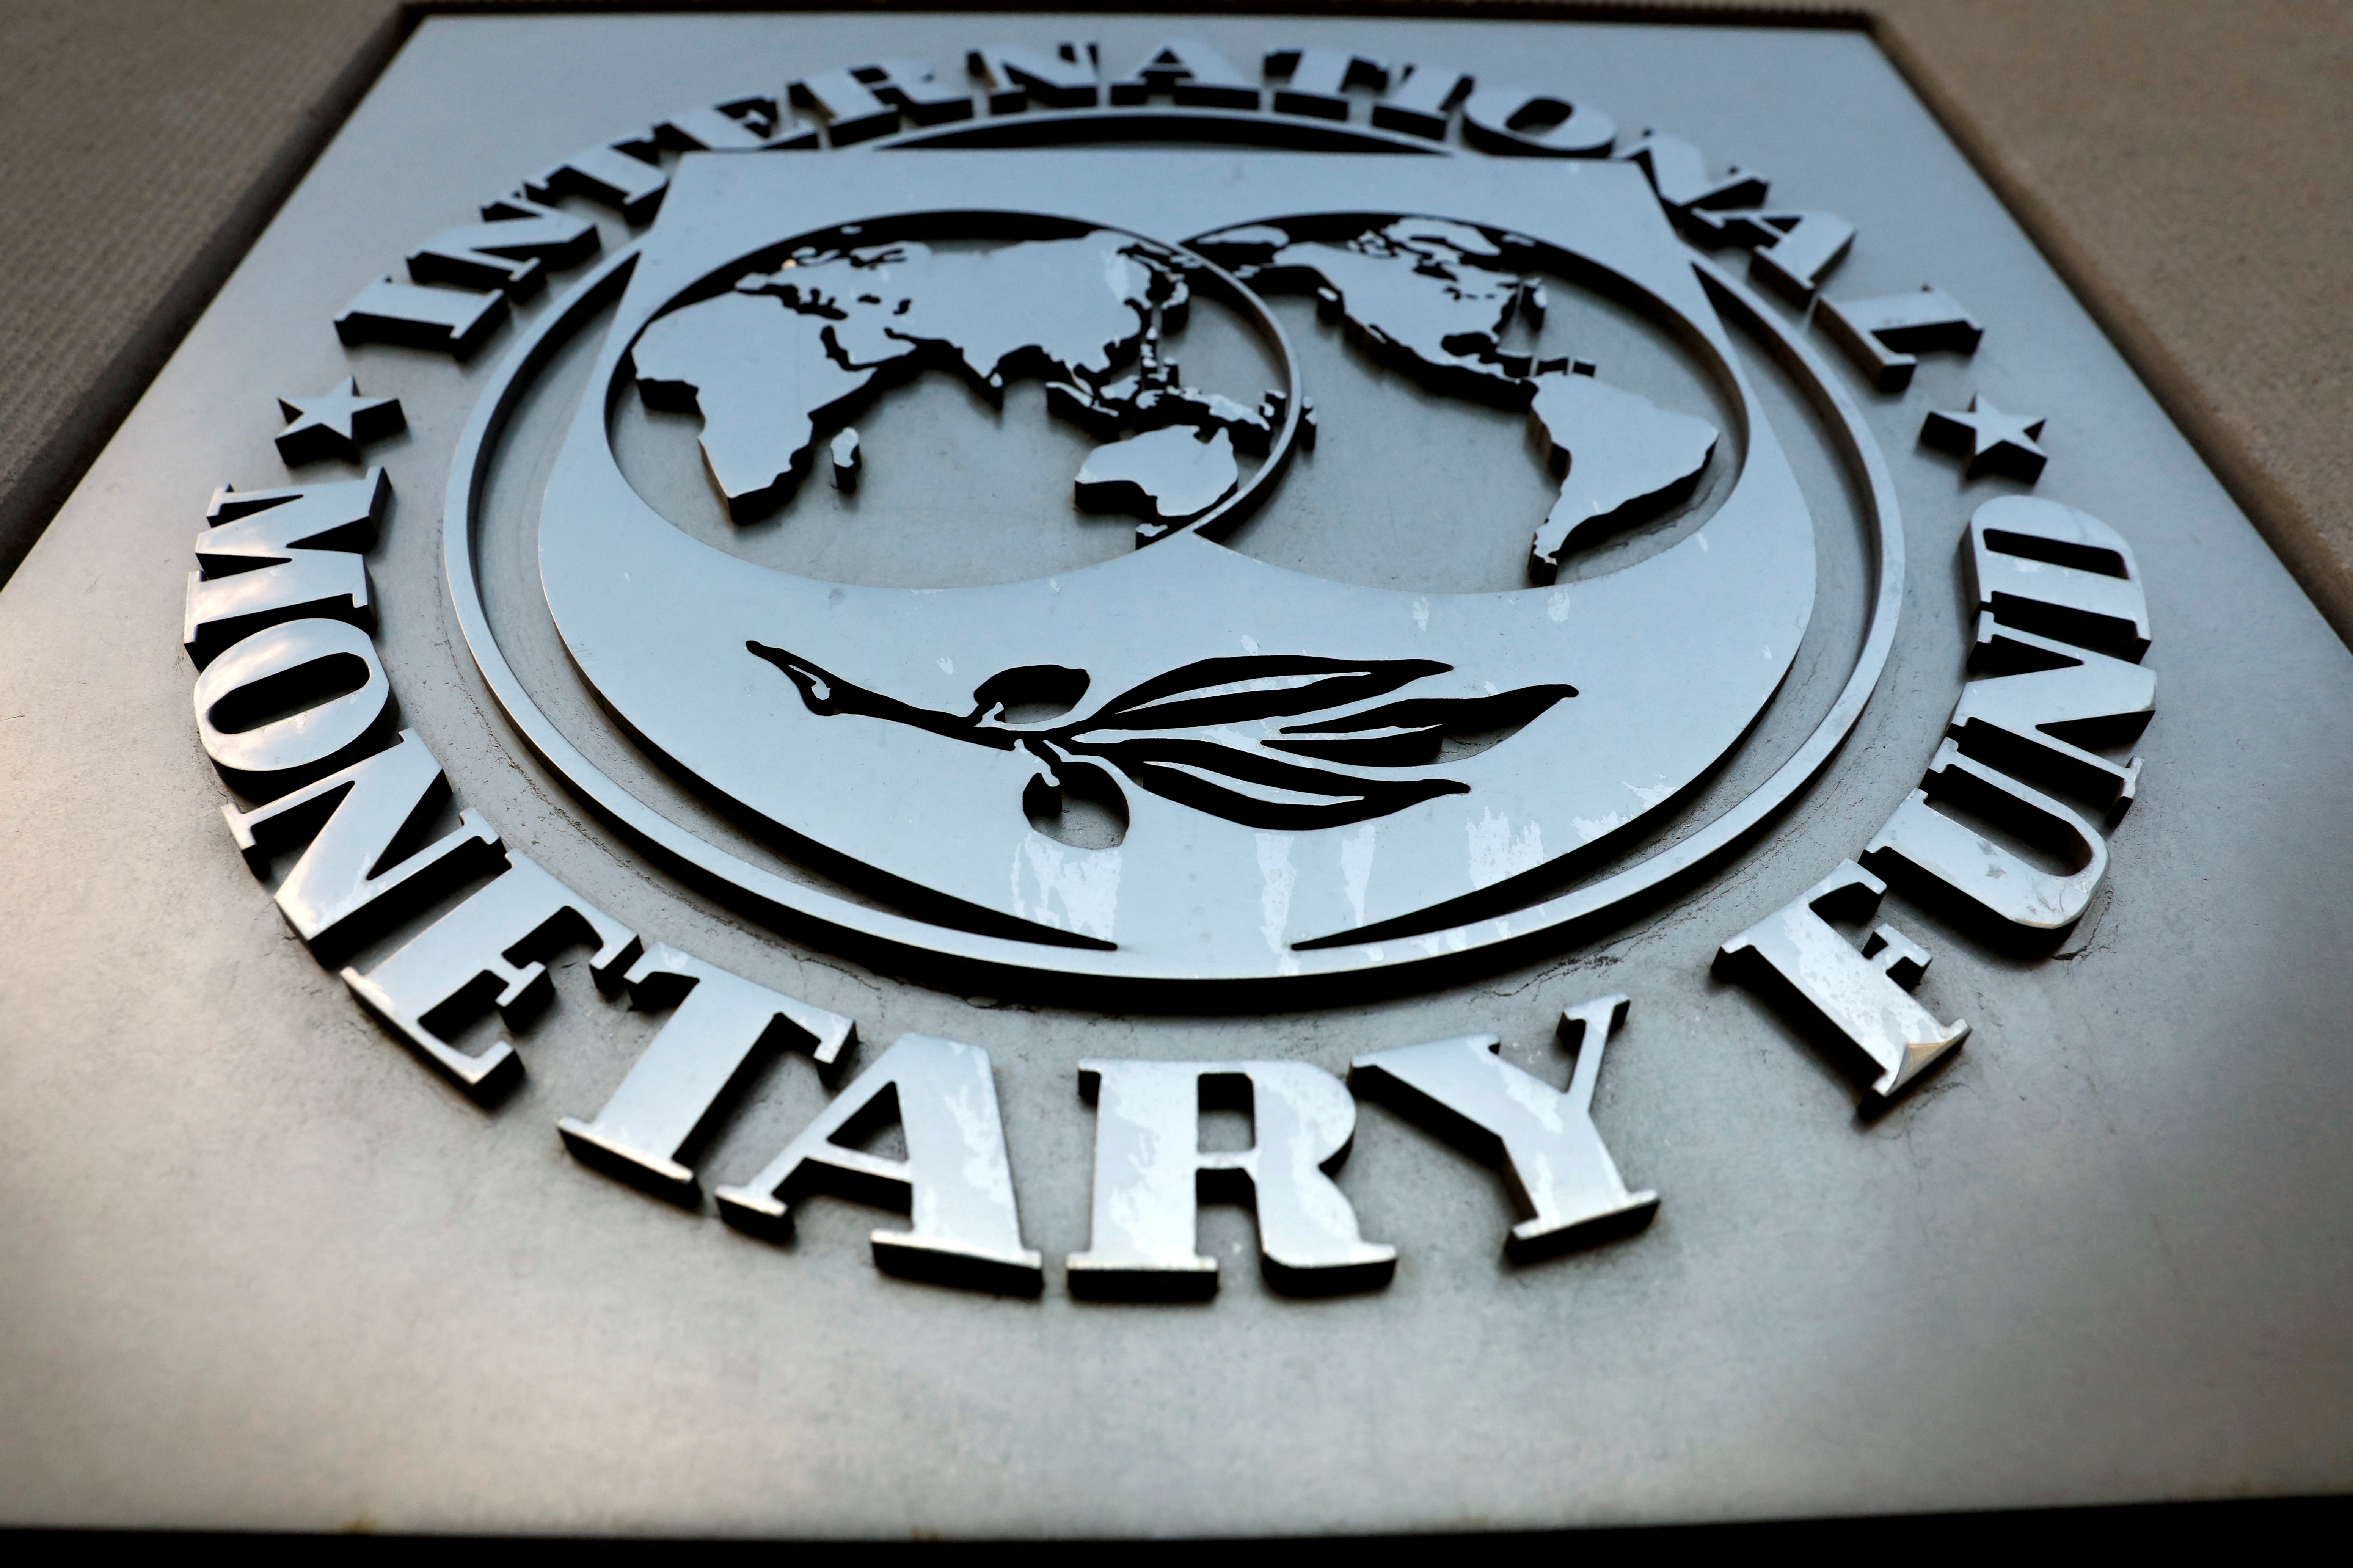 The IMF logo 